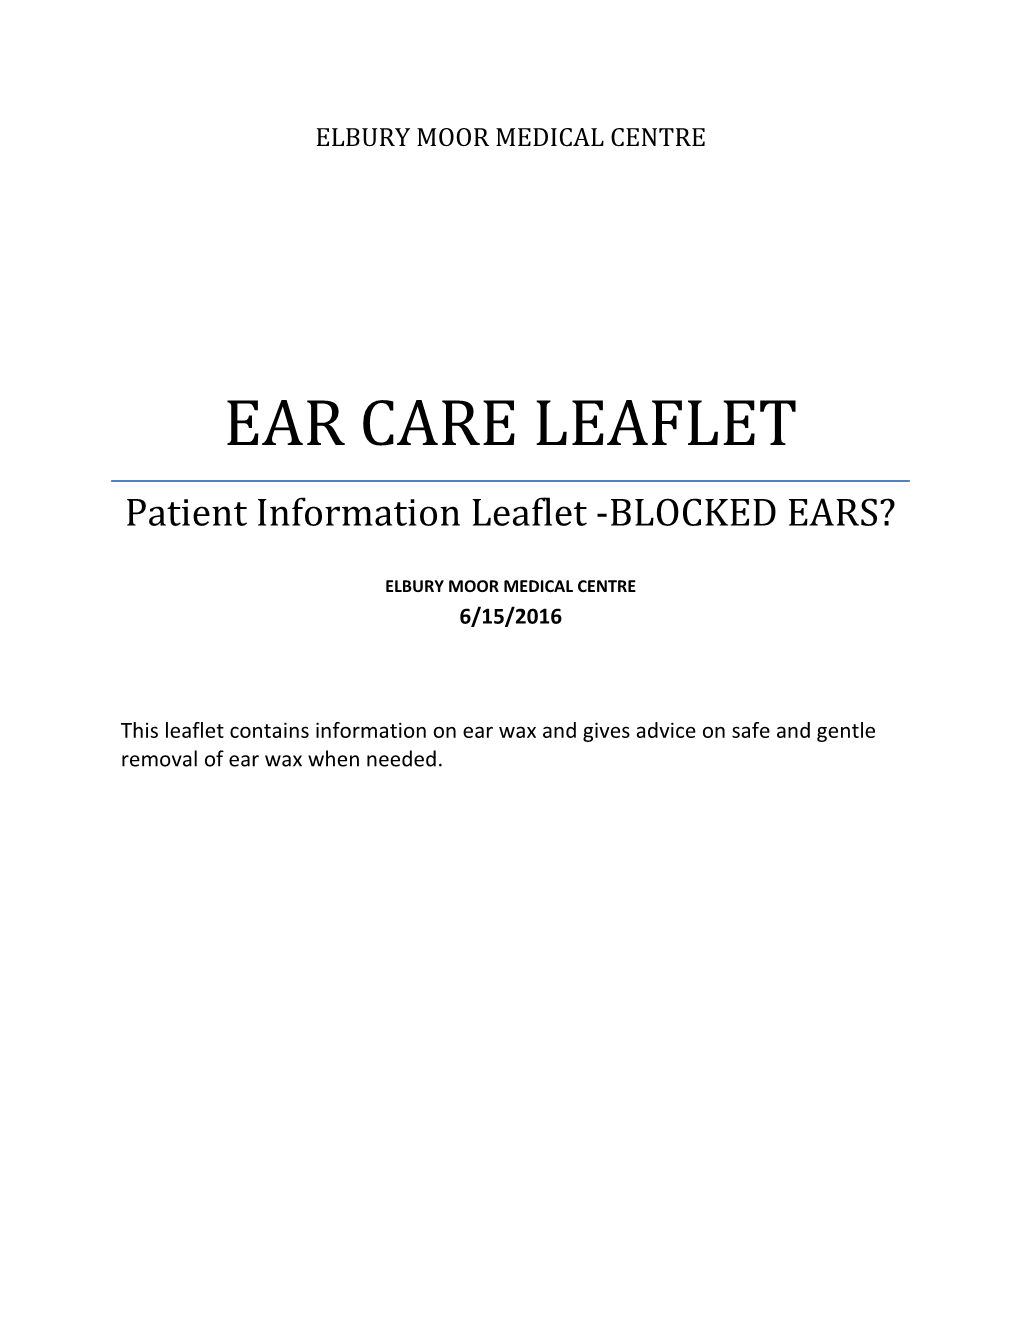 Ear Care Leaflet